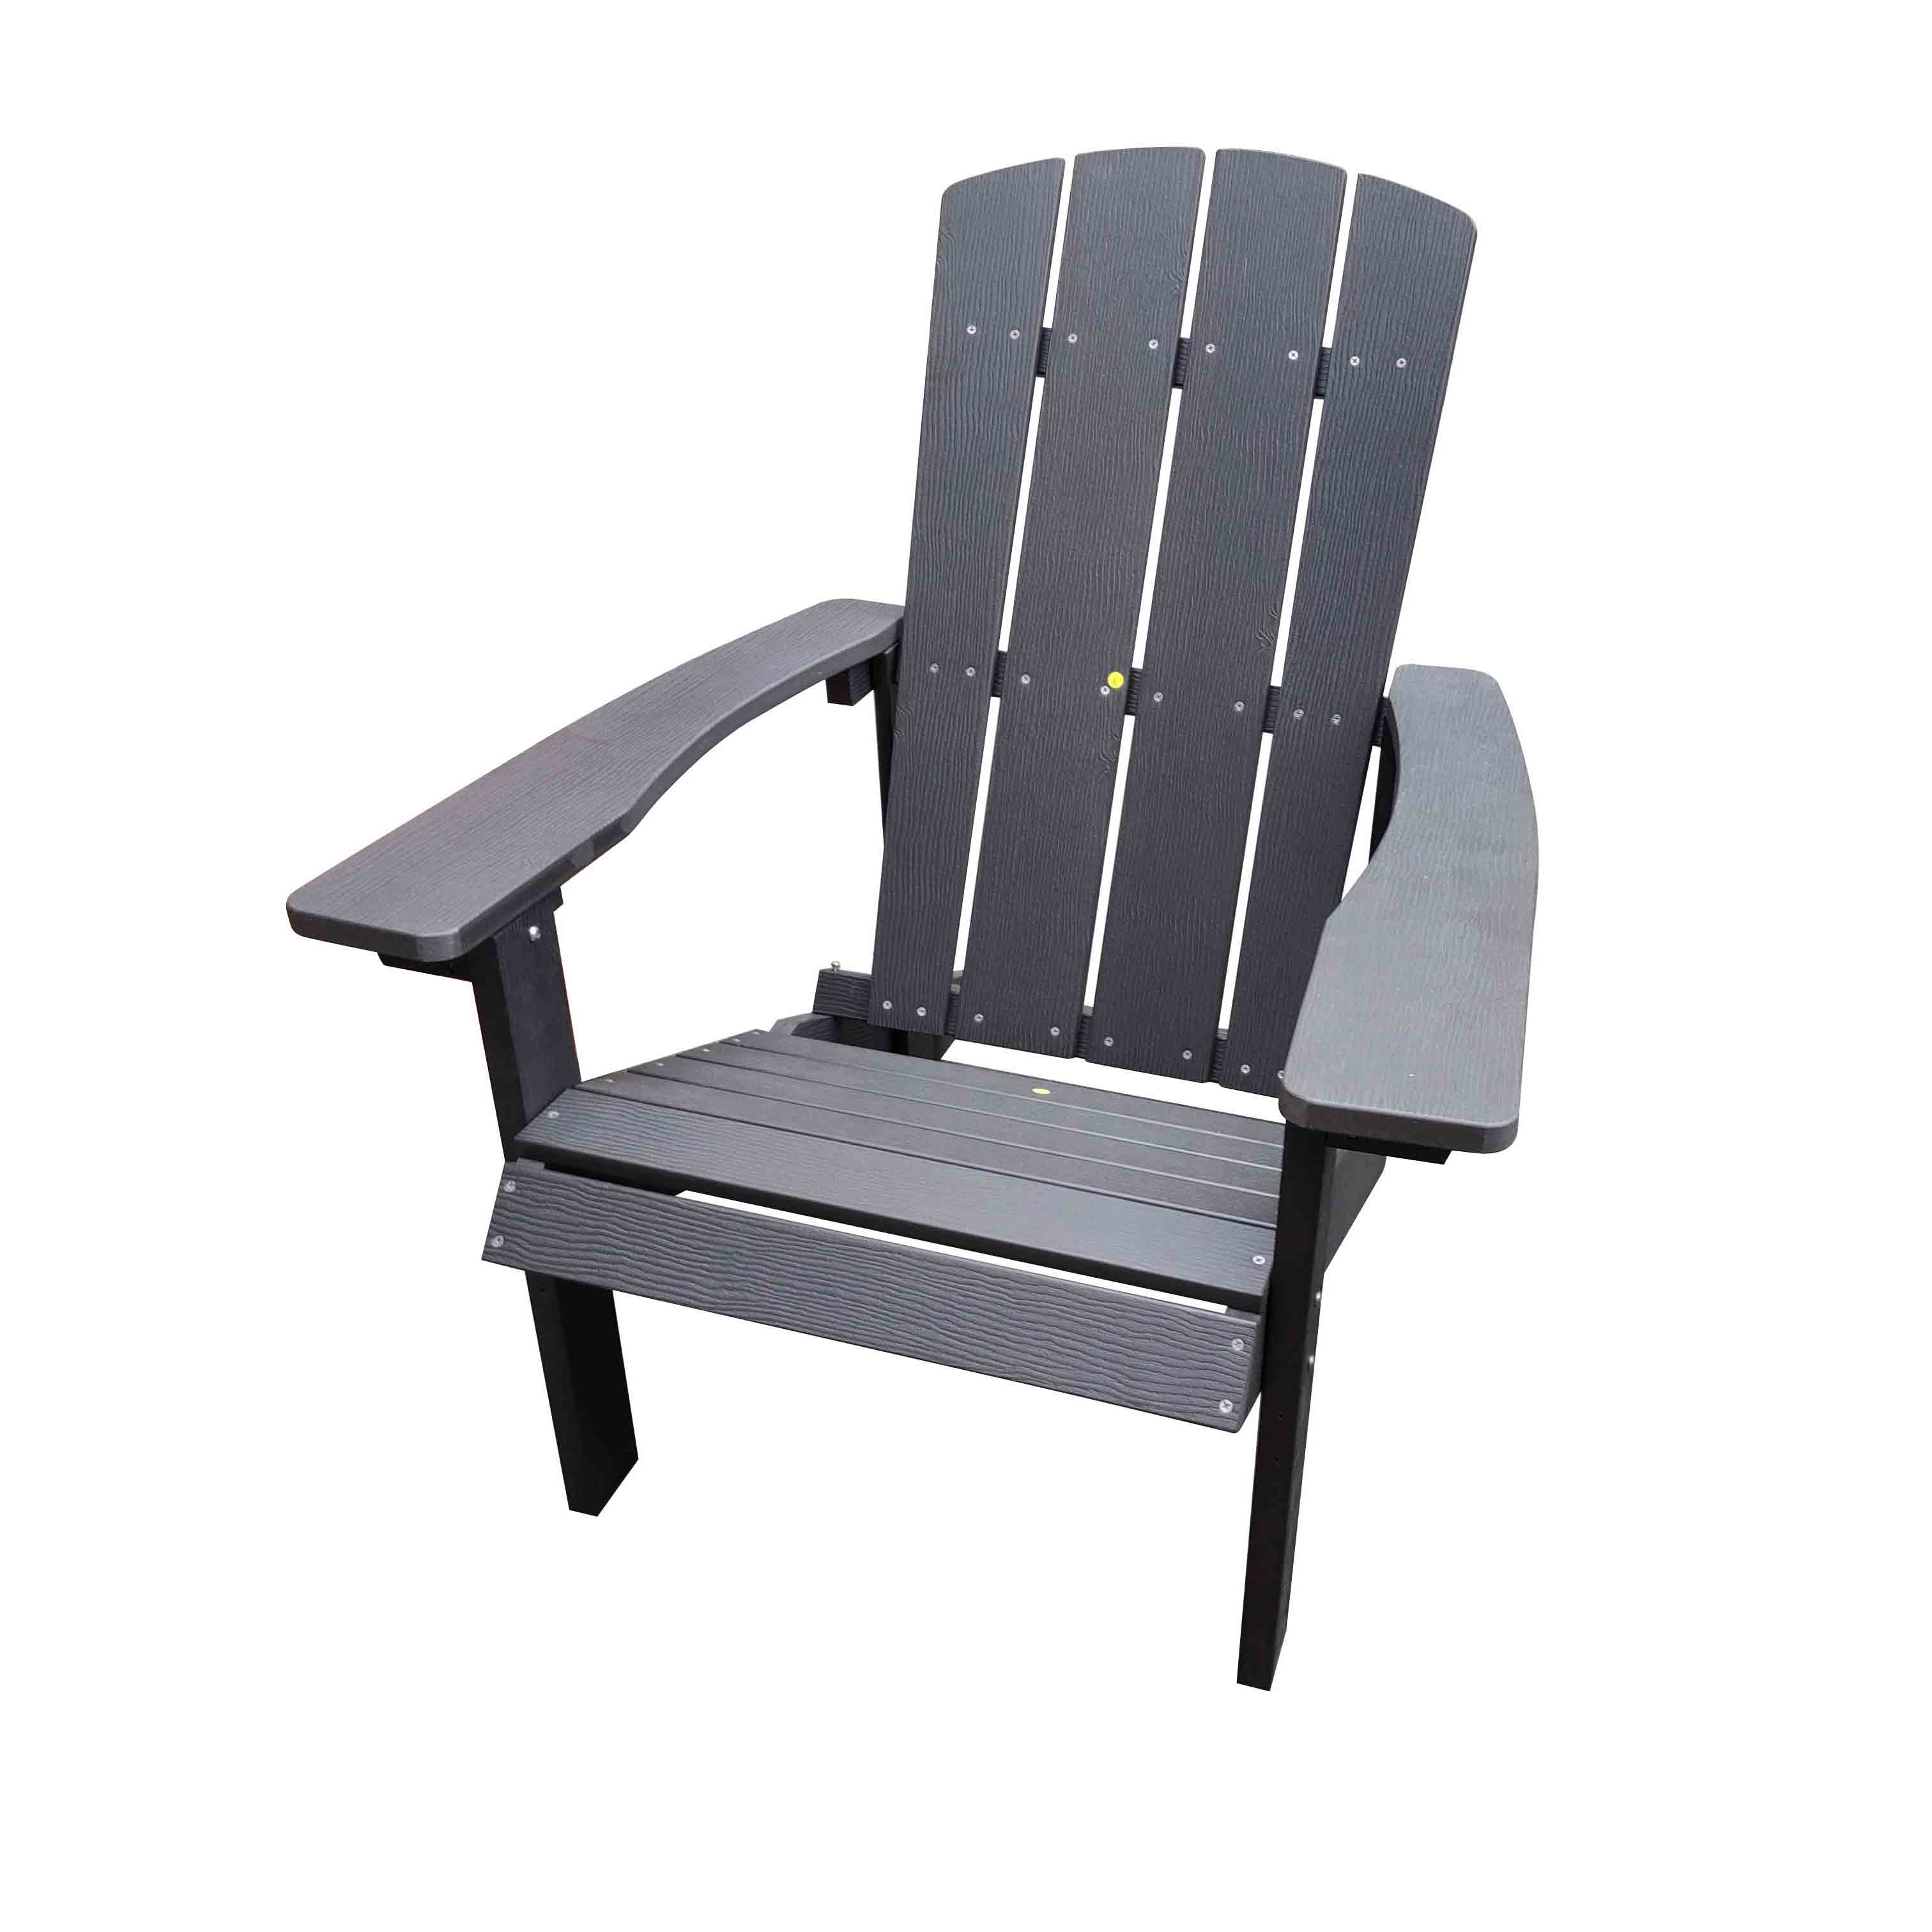 JJ-C14501-SLT-GG PS wood Adirondack chair Featured Image